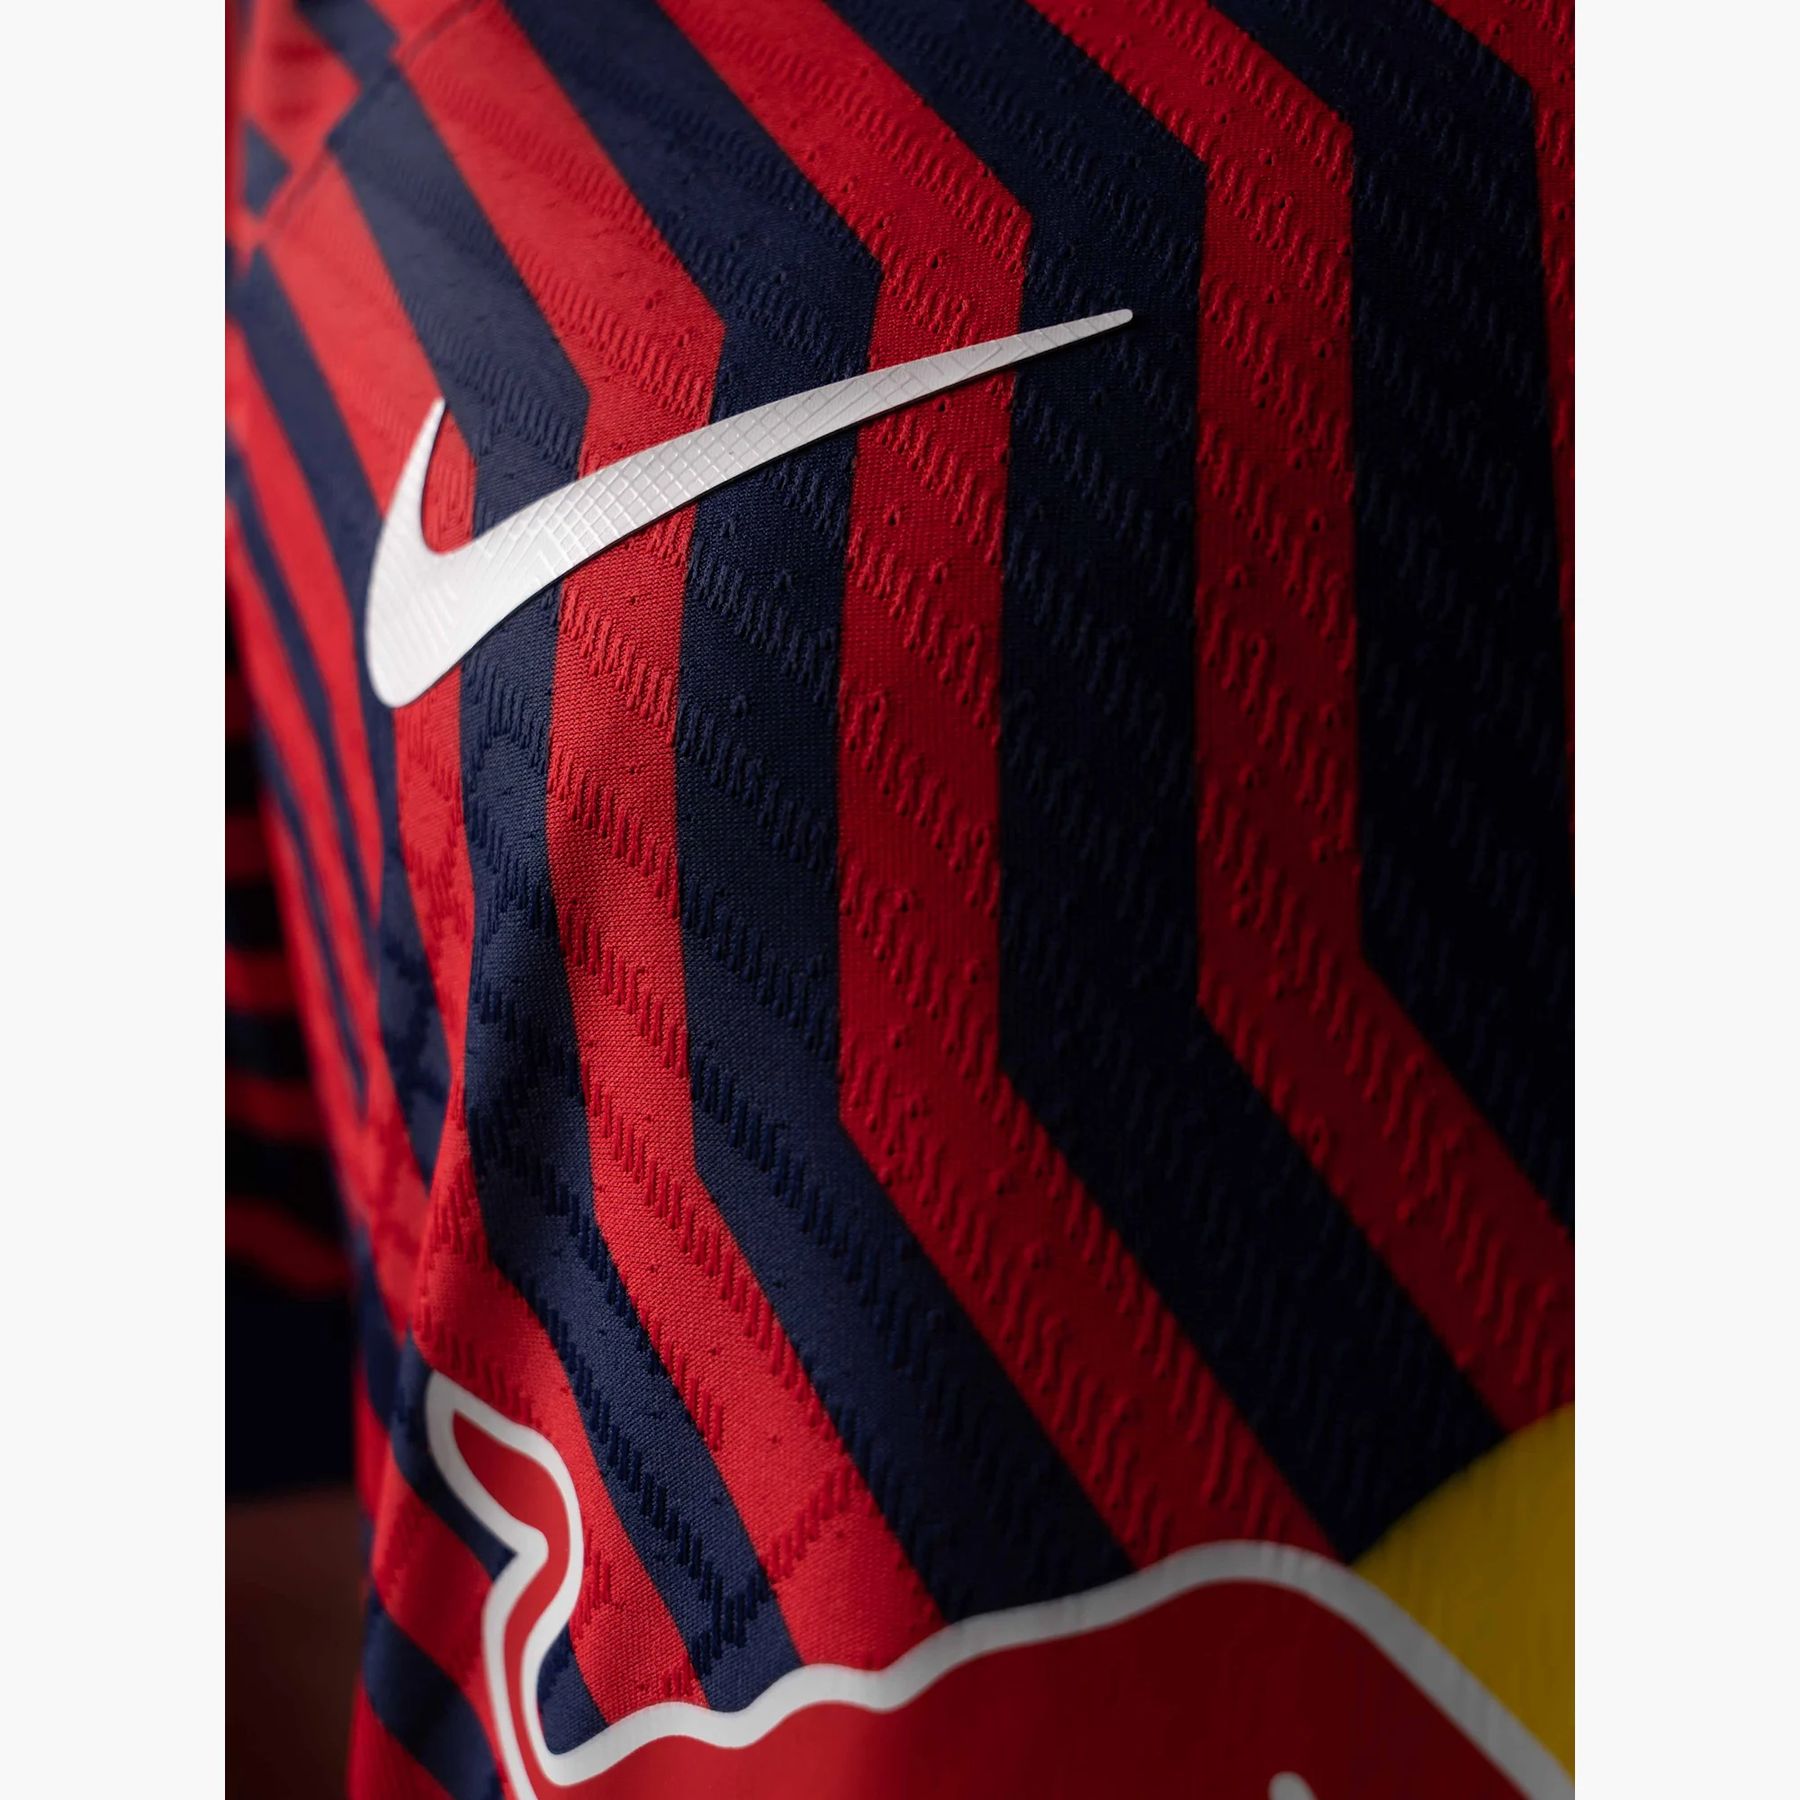 RB Leipzig 2023-24 Nike Away Kit - Football Shirt Culture - Latest ...